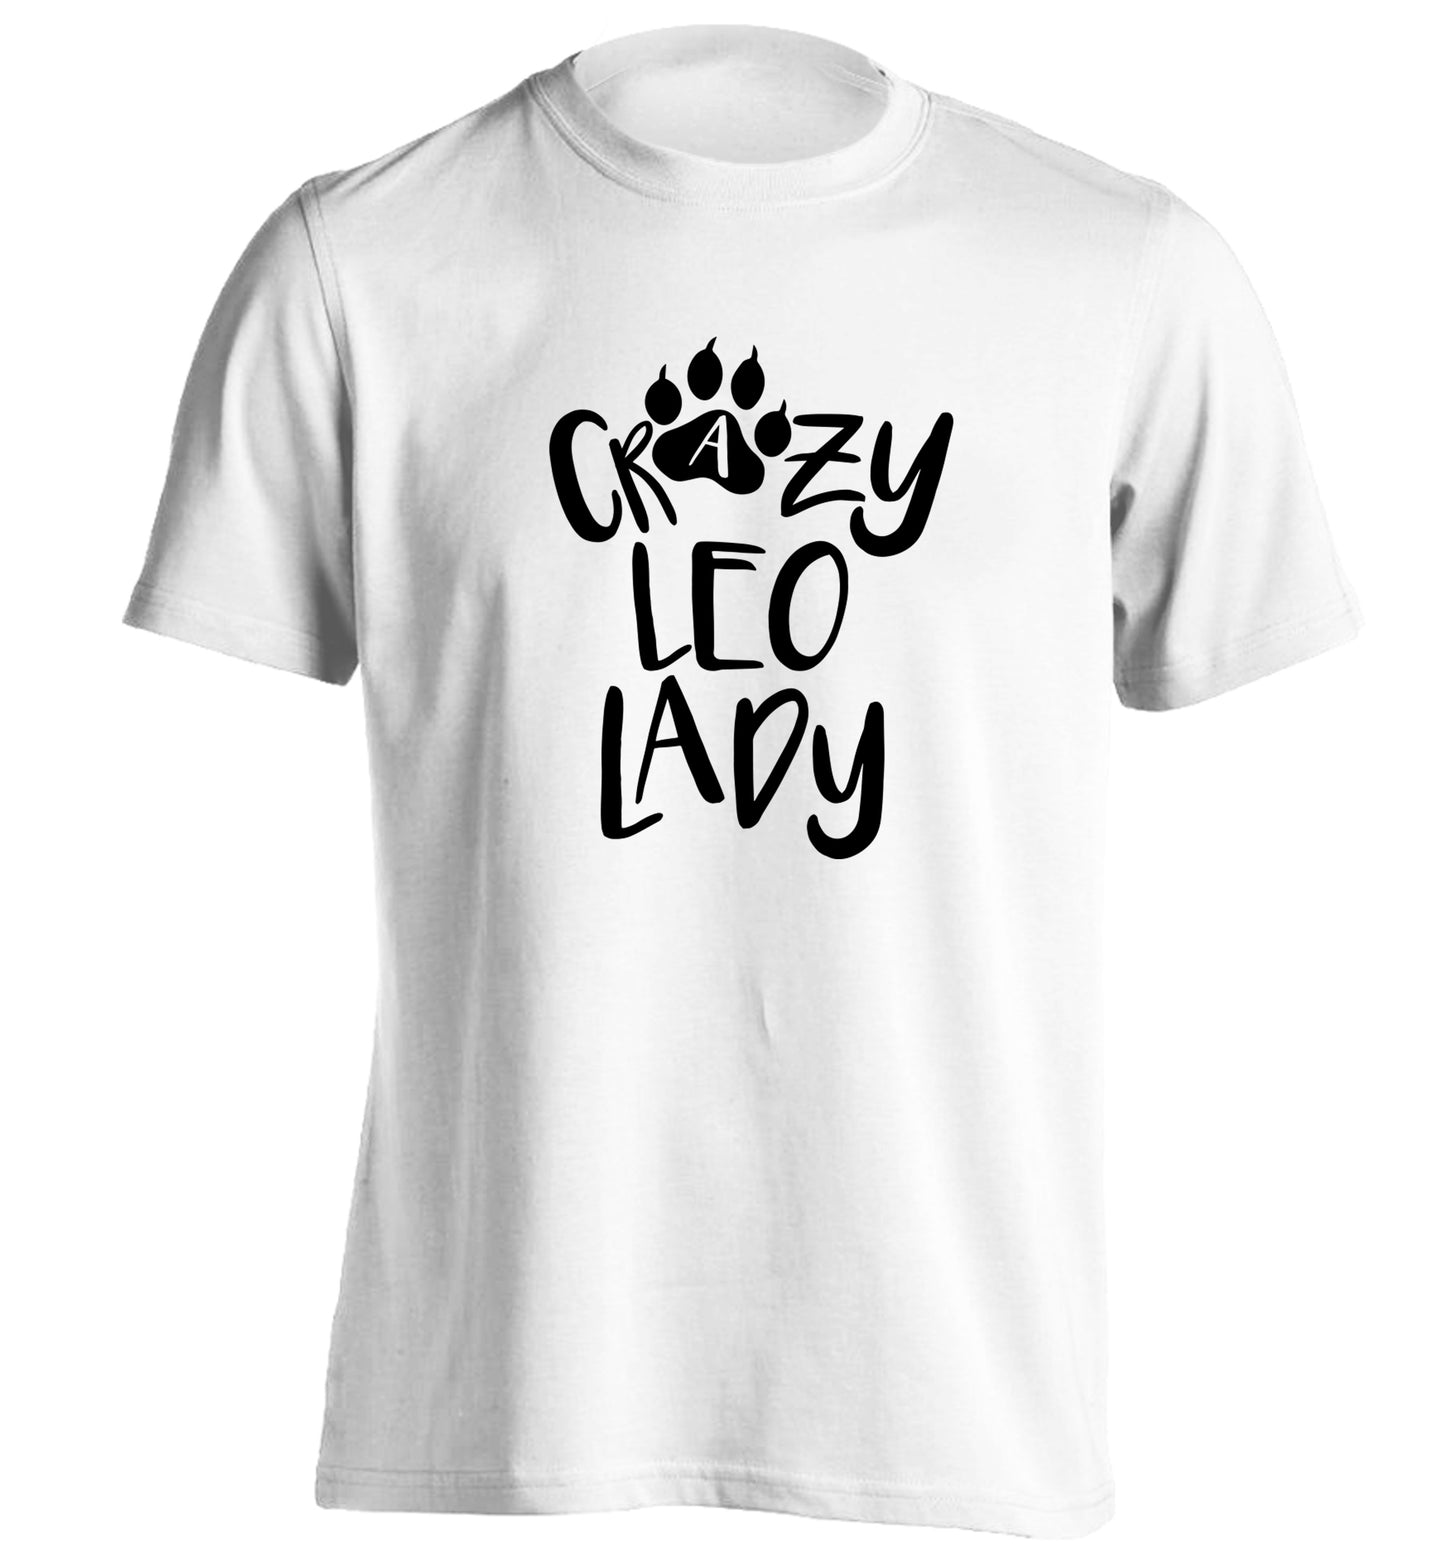 Crazy leo lady adults unisex white Tshirt 2XL